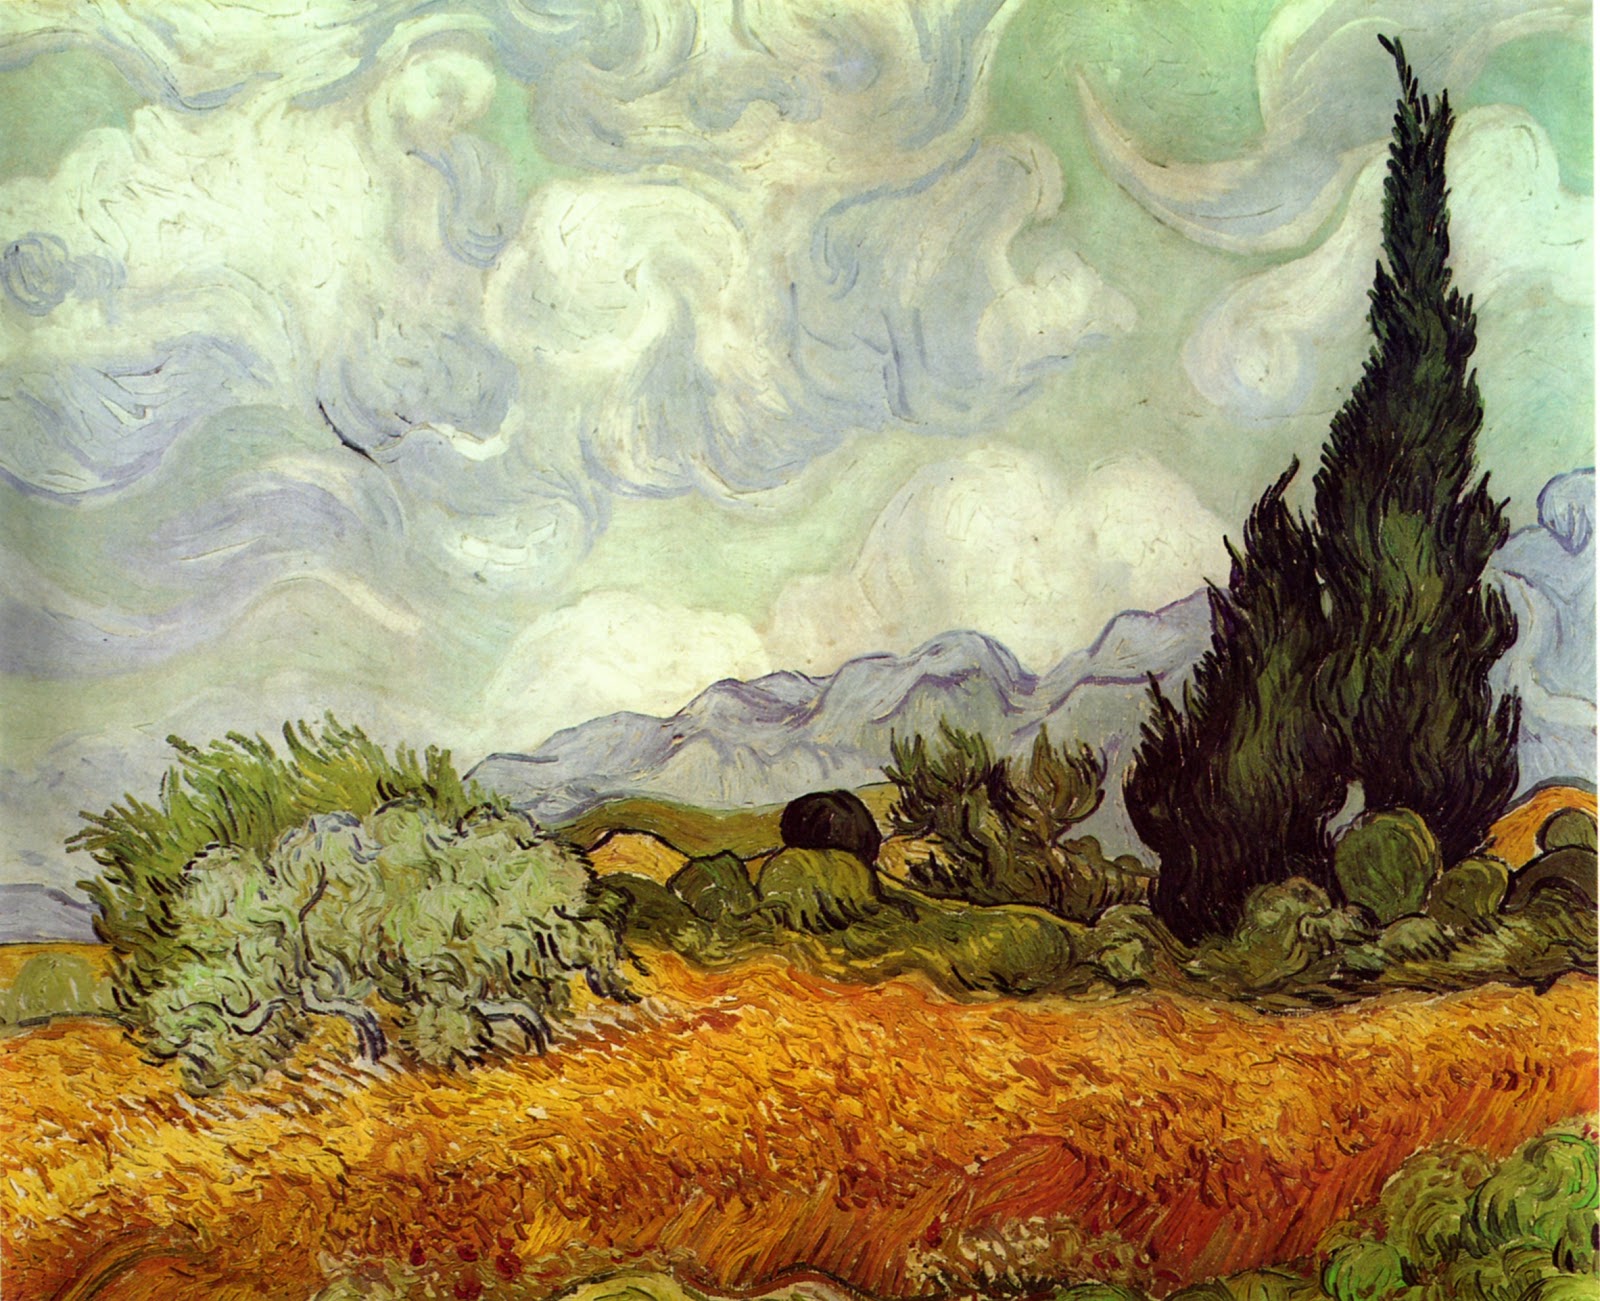 Vincent+Van+Gogh-1853-1890 (520).jpg